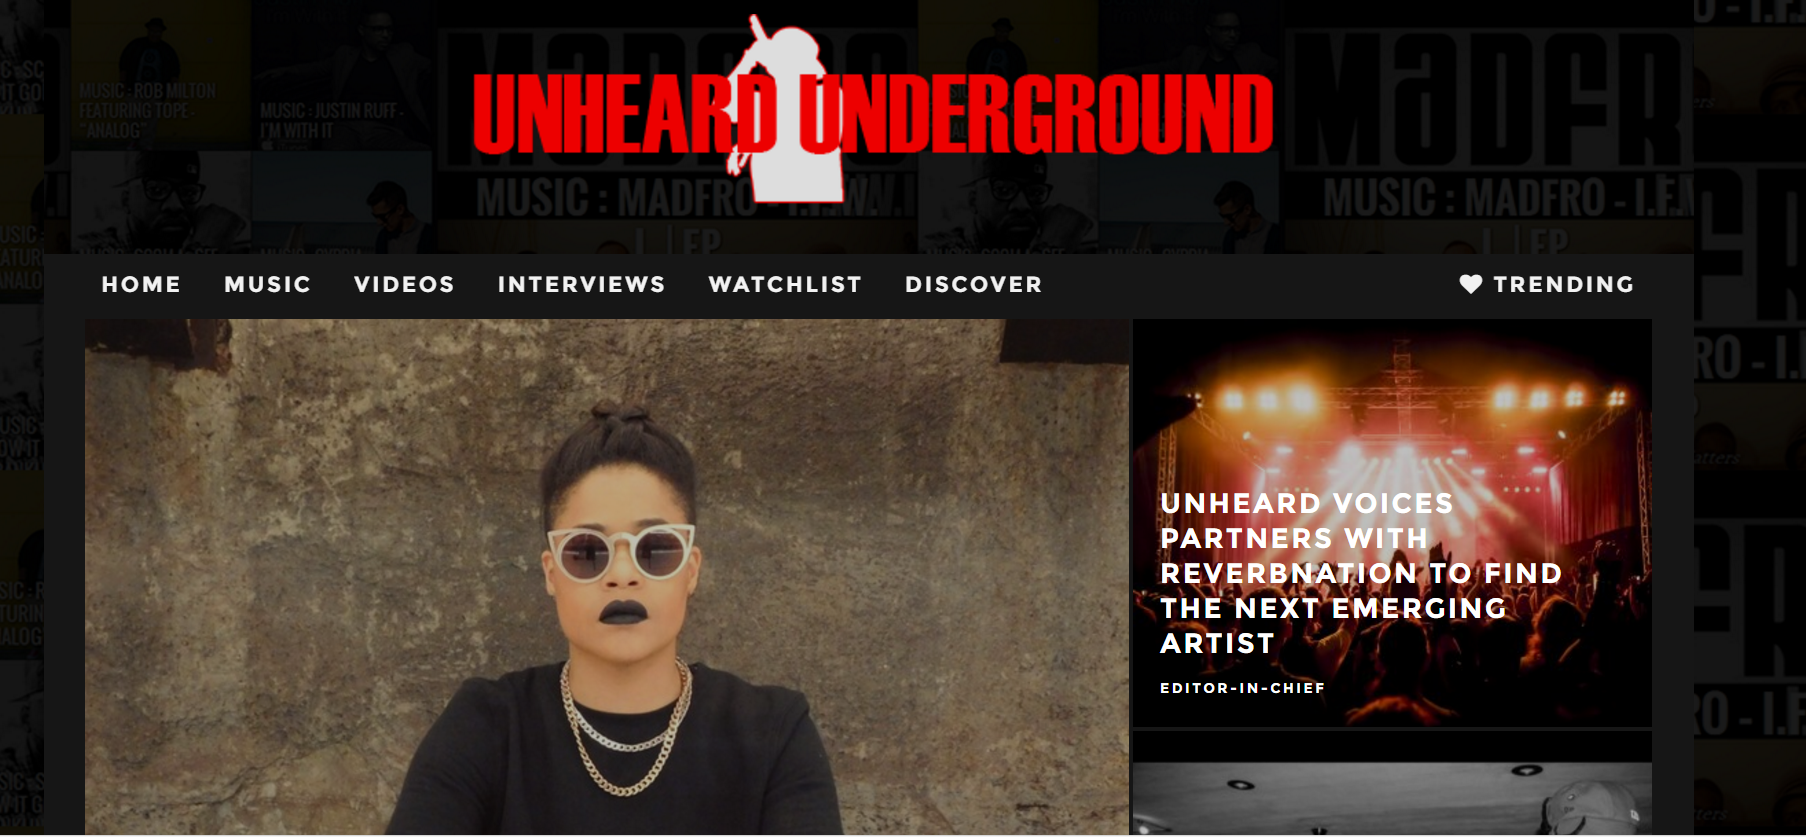 Unheard Voices Launches New Music Site Called Unheard Underground